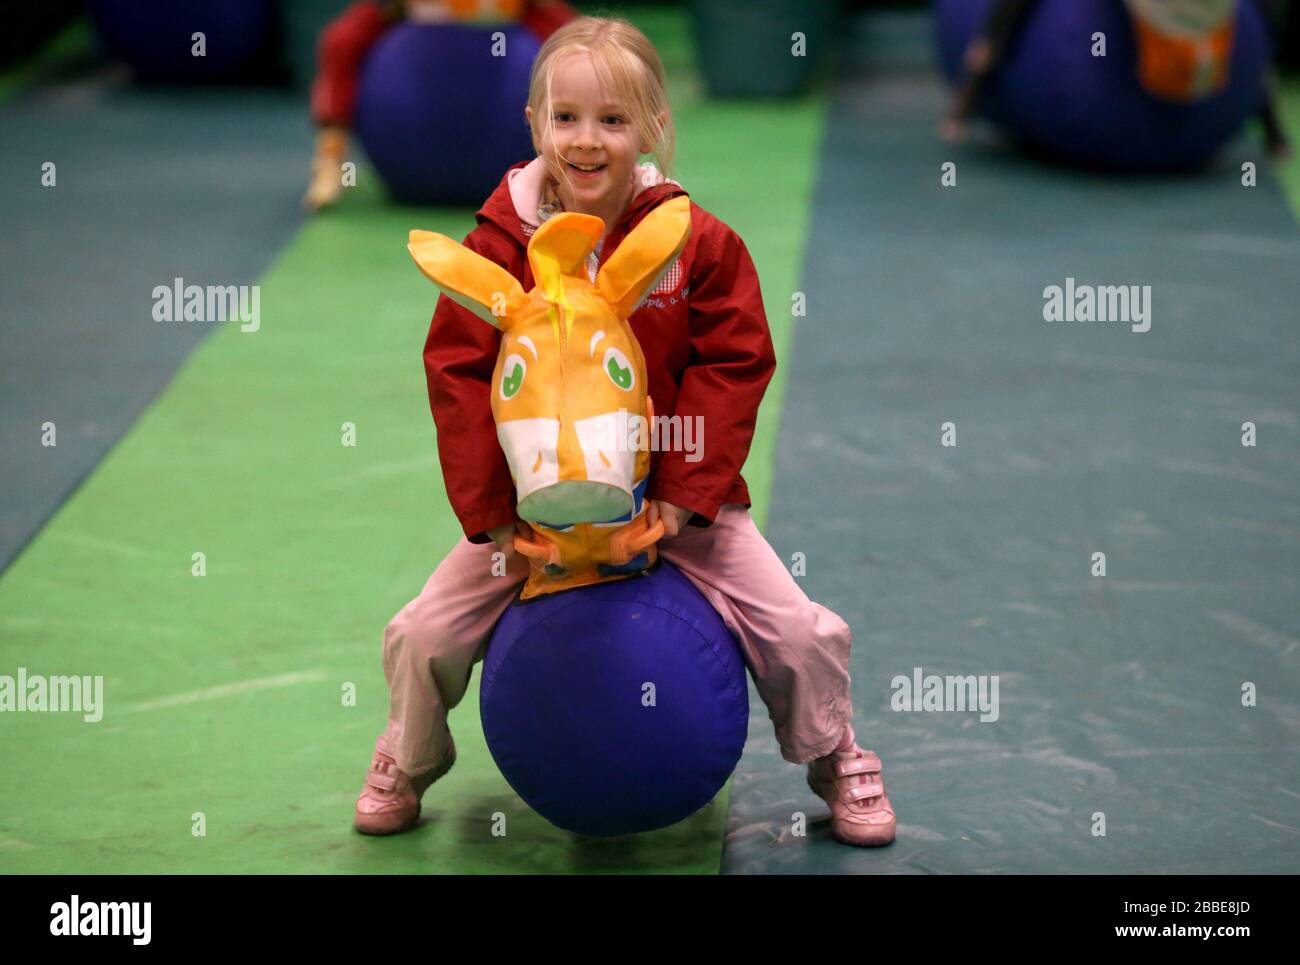 A children's activity inside at Sandown Park Racecourse Stock Photo